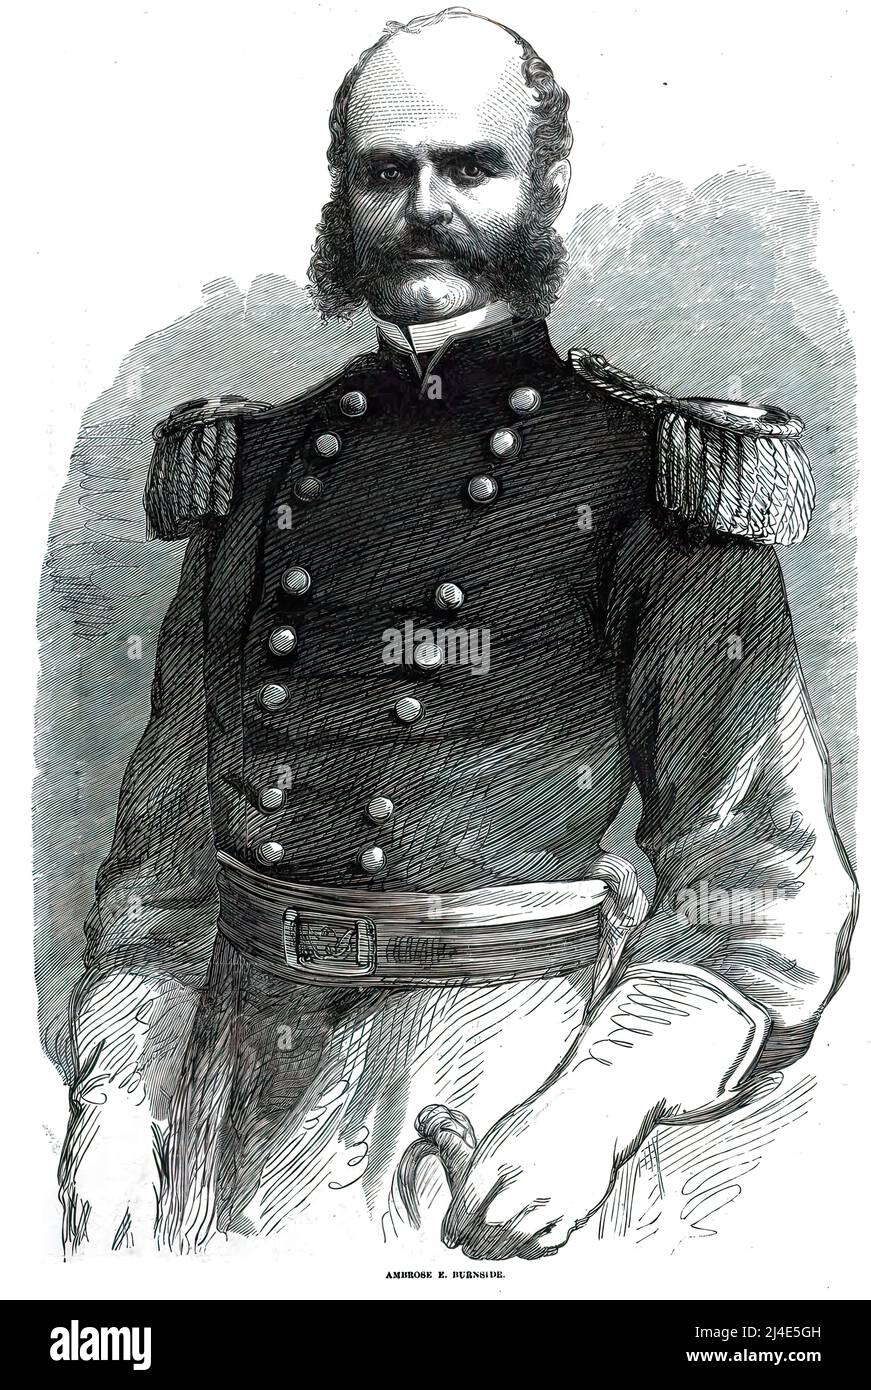 Ambrose Everett Burnside, Union Army General in the American Civil War and Rhode Island governor and senator. 19th century illustration. Stock Photo